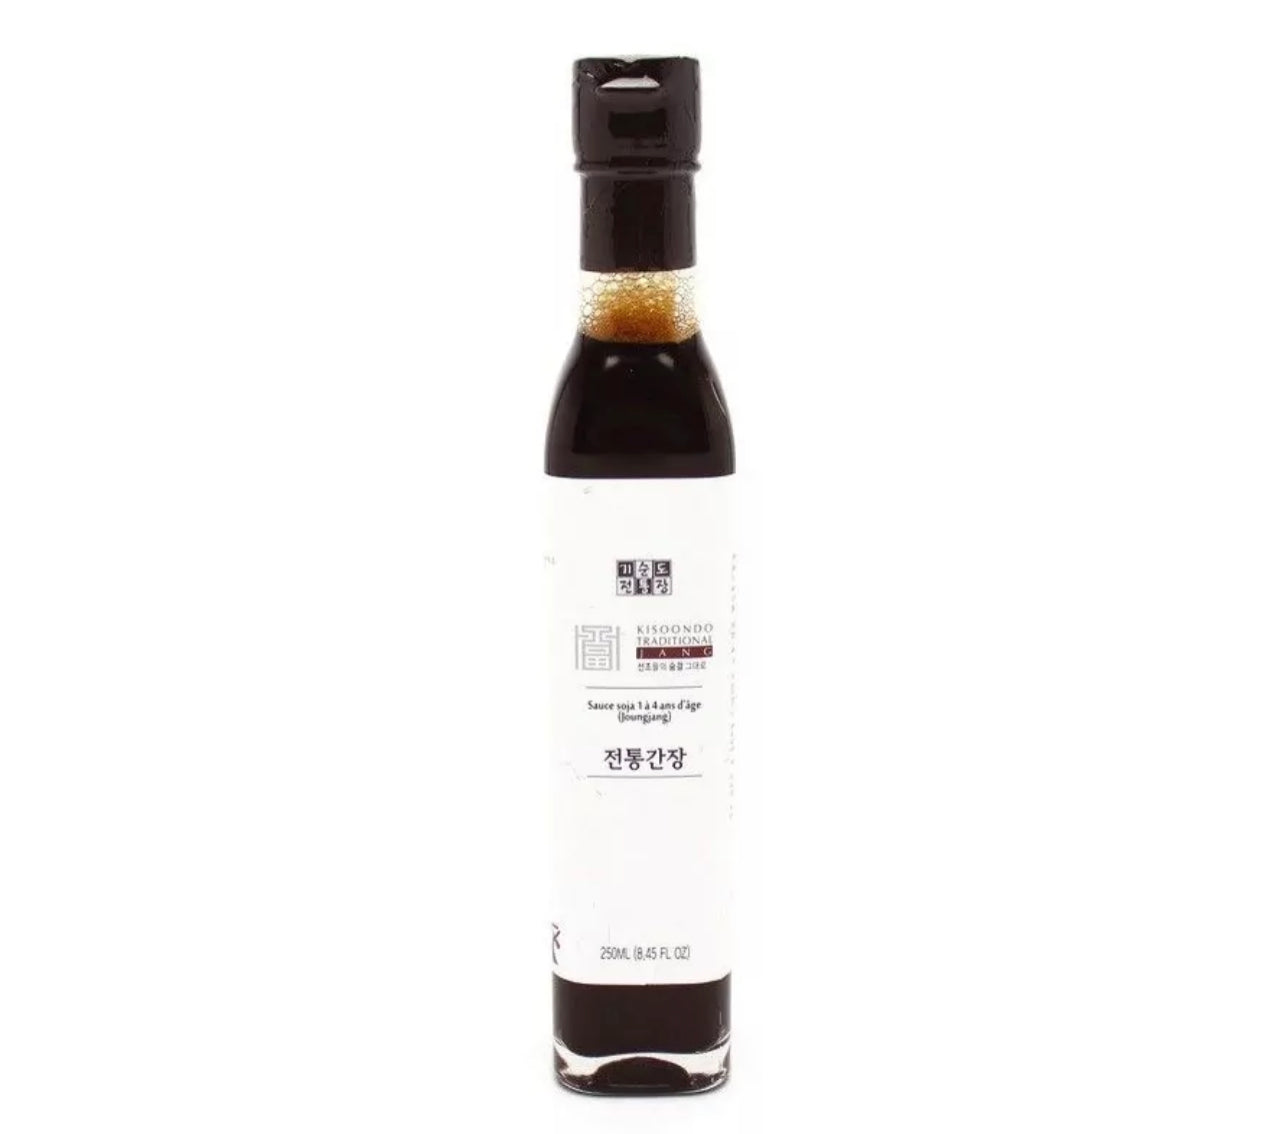 Korean soy sauce 1 to 4 years (joungjang) - 250ml